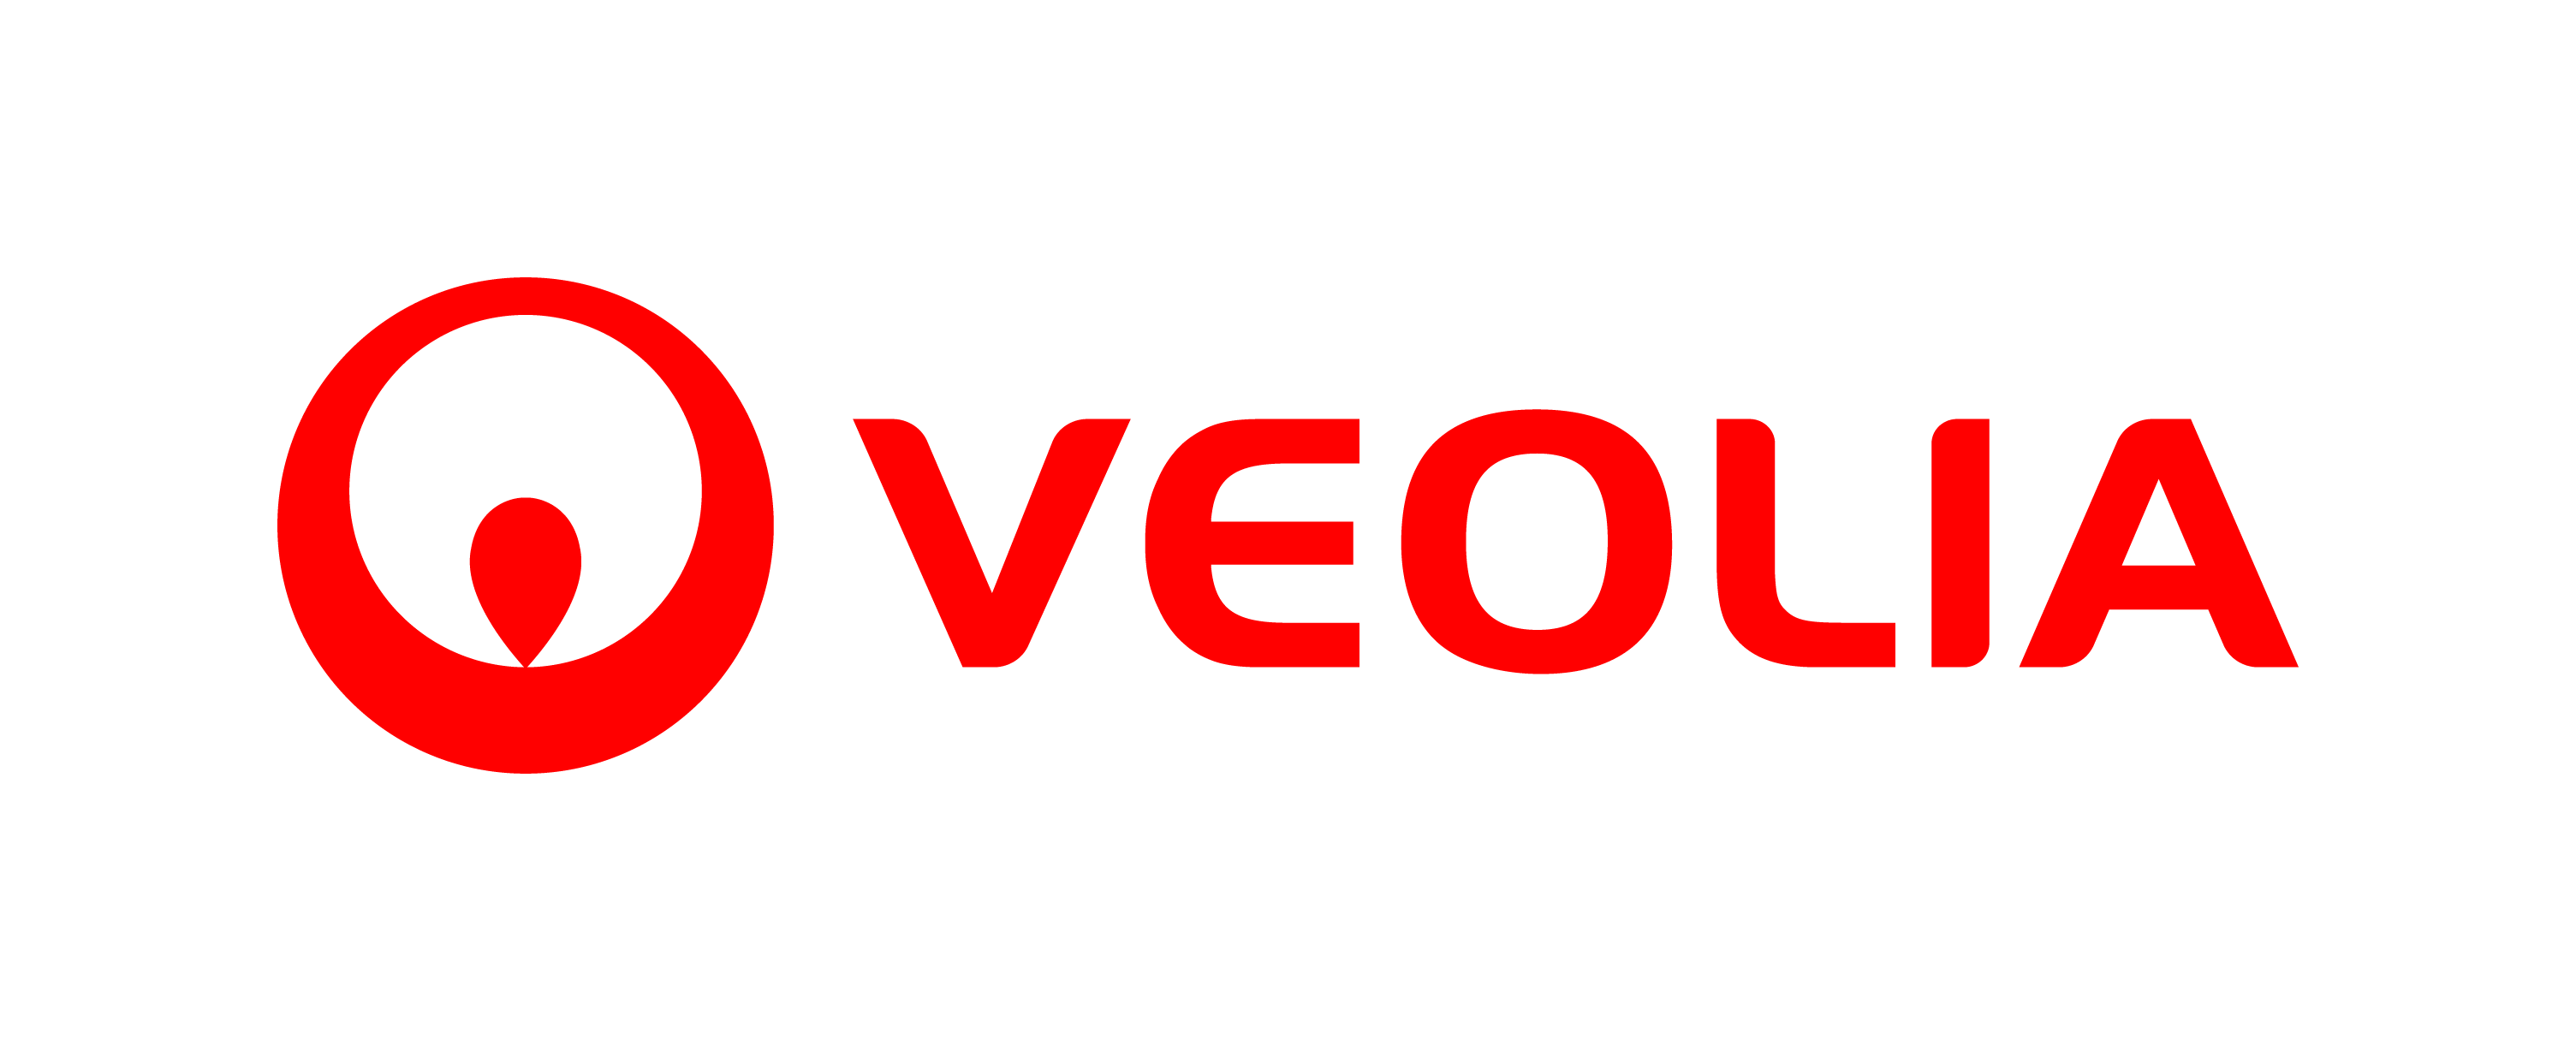 veolia logo